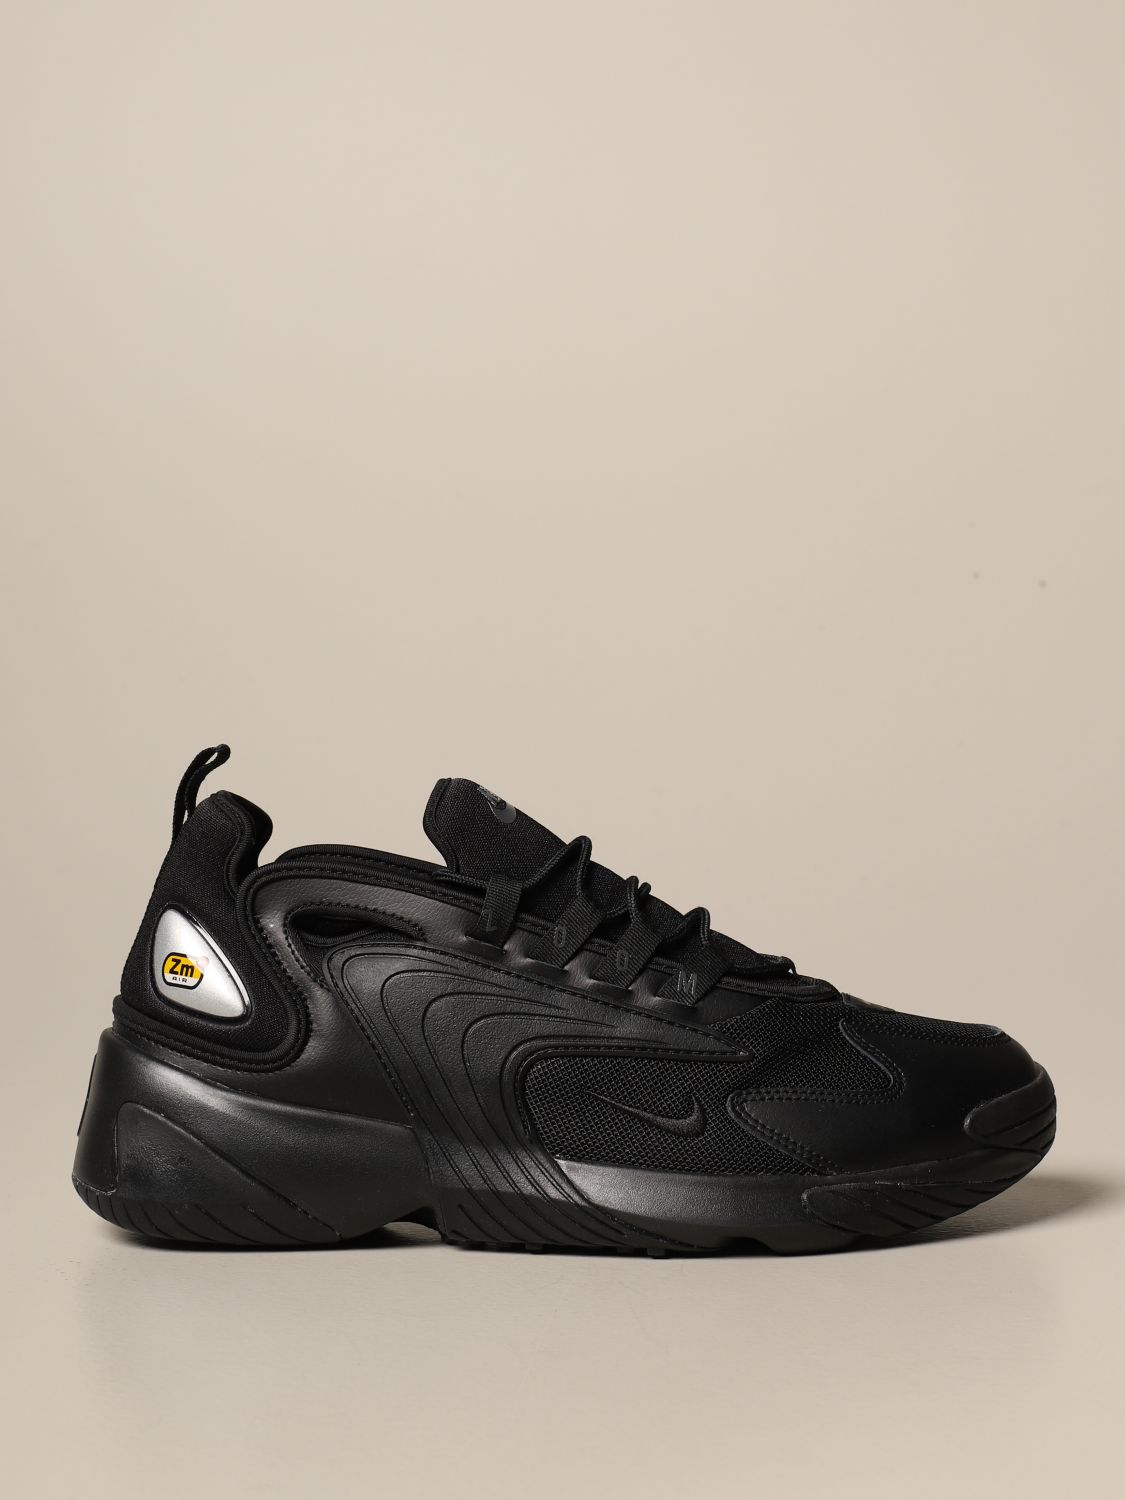 Benigno Juramento Comida sana NIKE: Zoom 2k sneakers in leather and micro mesh - Black 1 | Nike sneakers  A00269 online on GIGLIO.COM